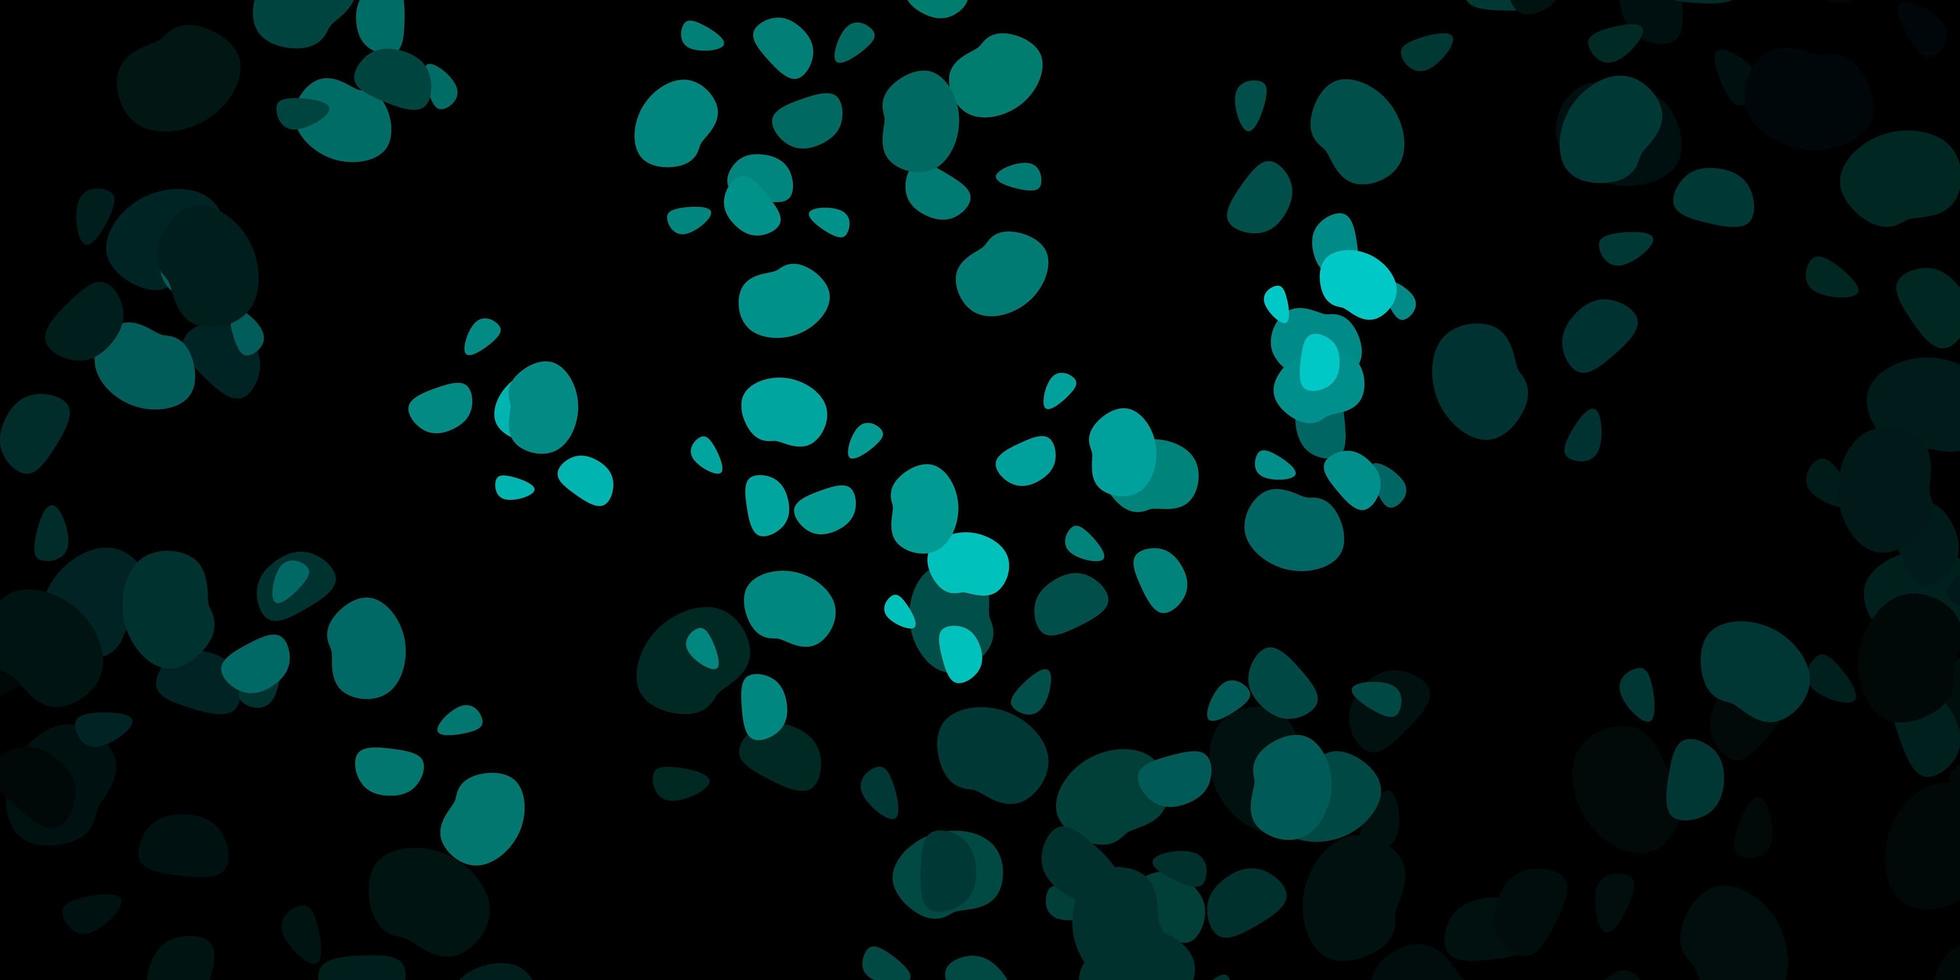 Dark green vector background with random forms.